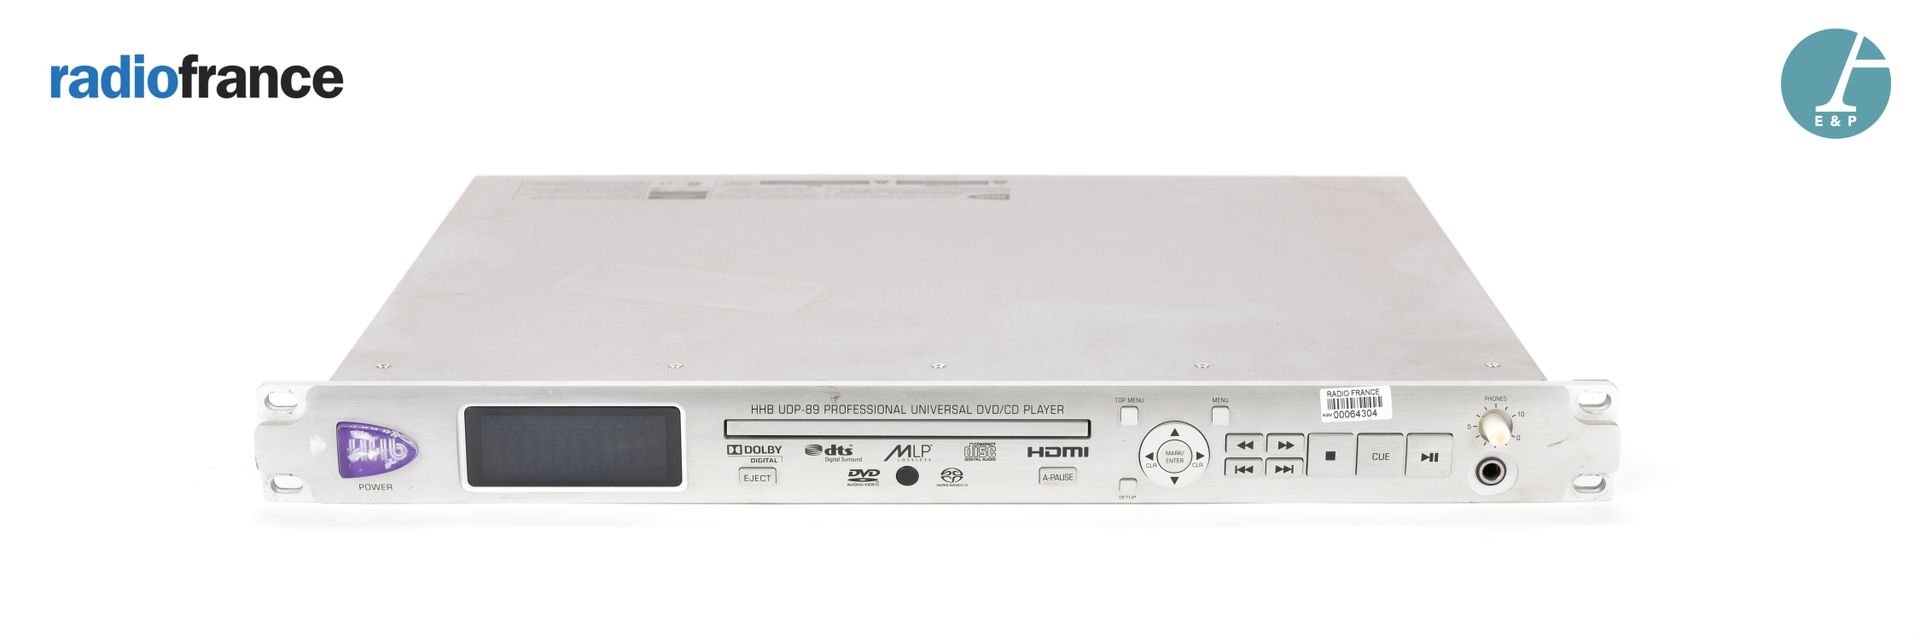 Null HHB，CD-DVD播放器HHBUDP-89。

高：4.5厘米 - 宽：48厘米 - 深：35厘米

有了它的远程控制。

改革后的设备，使用状况，&hellip;